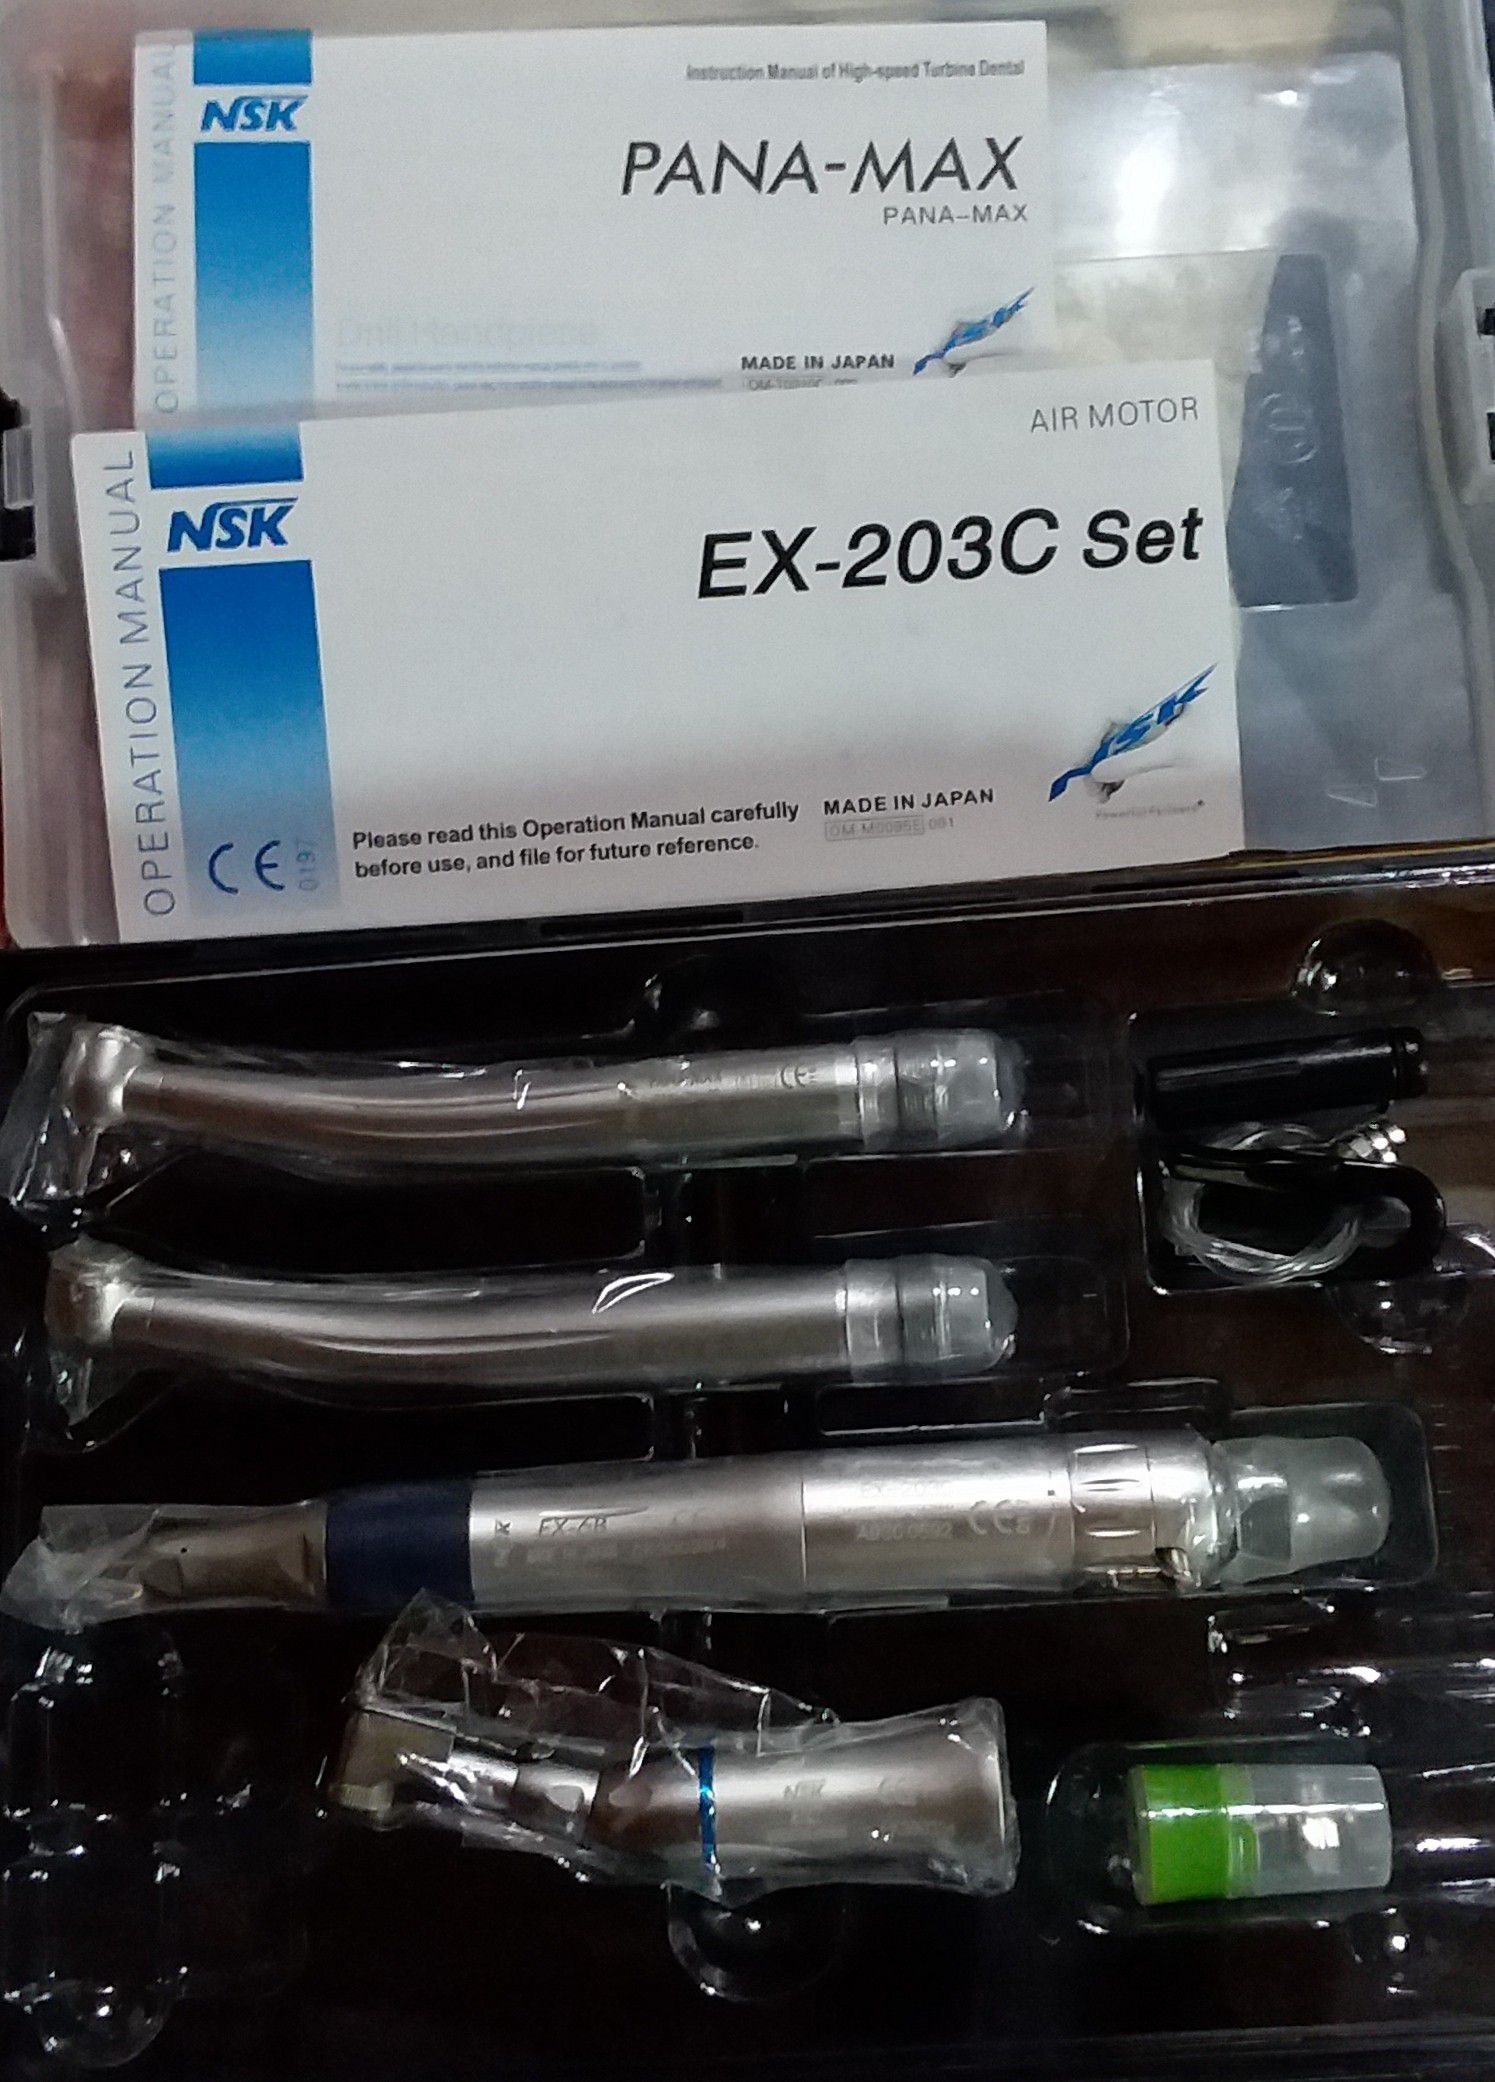 NSK EX-203C Dental Set (new)